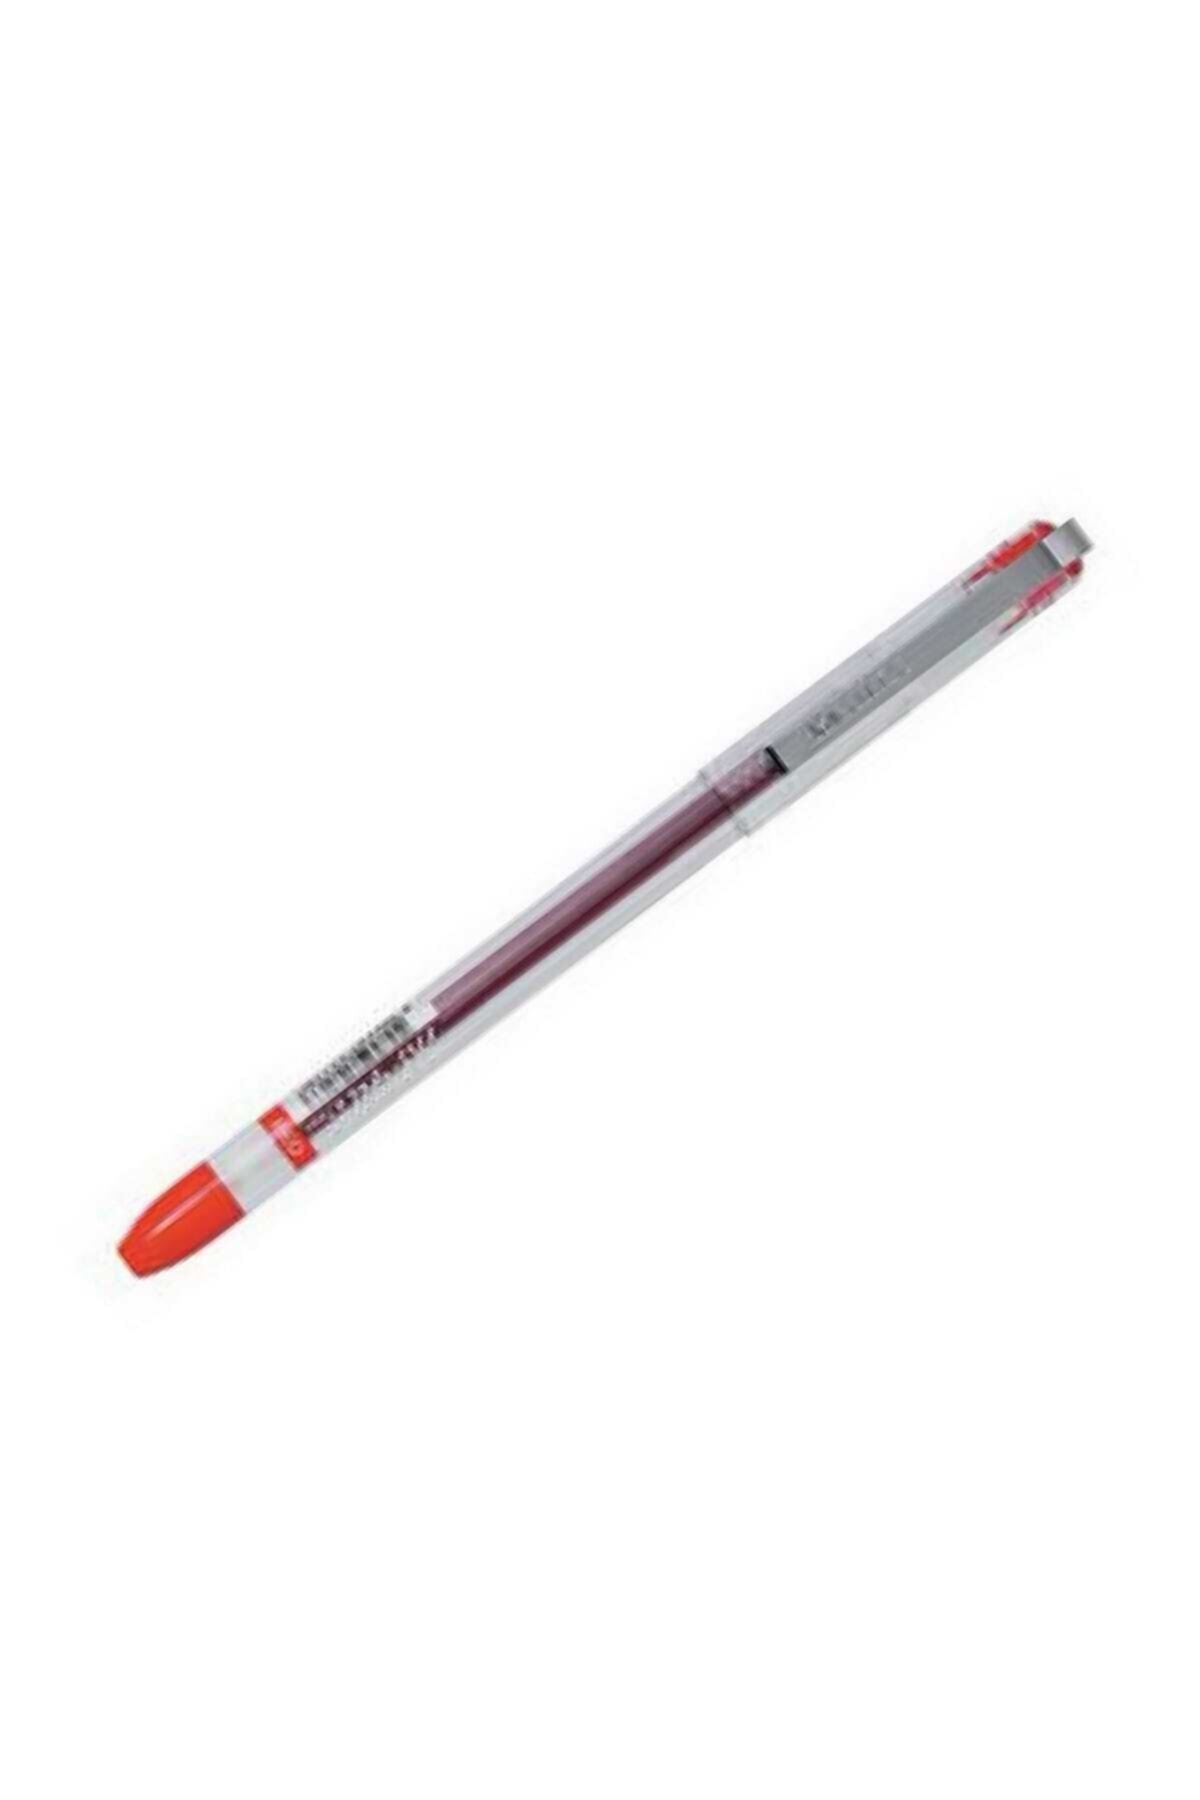 Dong-A Kırmızı Imza Kalemi | My-gel Iğne Uçlu Jel Kalem Kırmızı